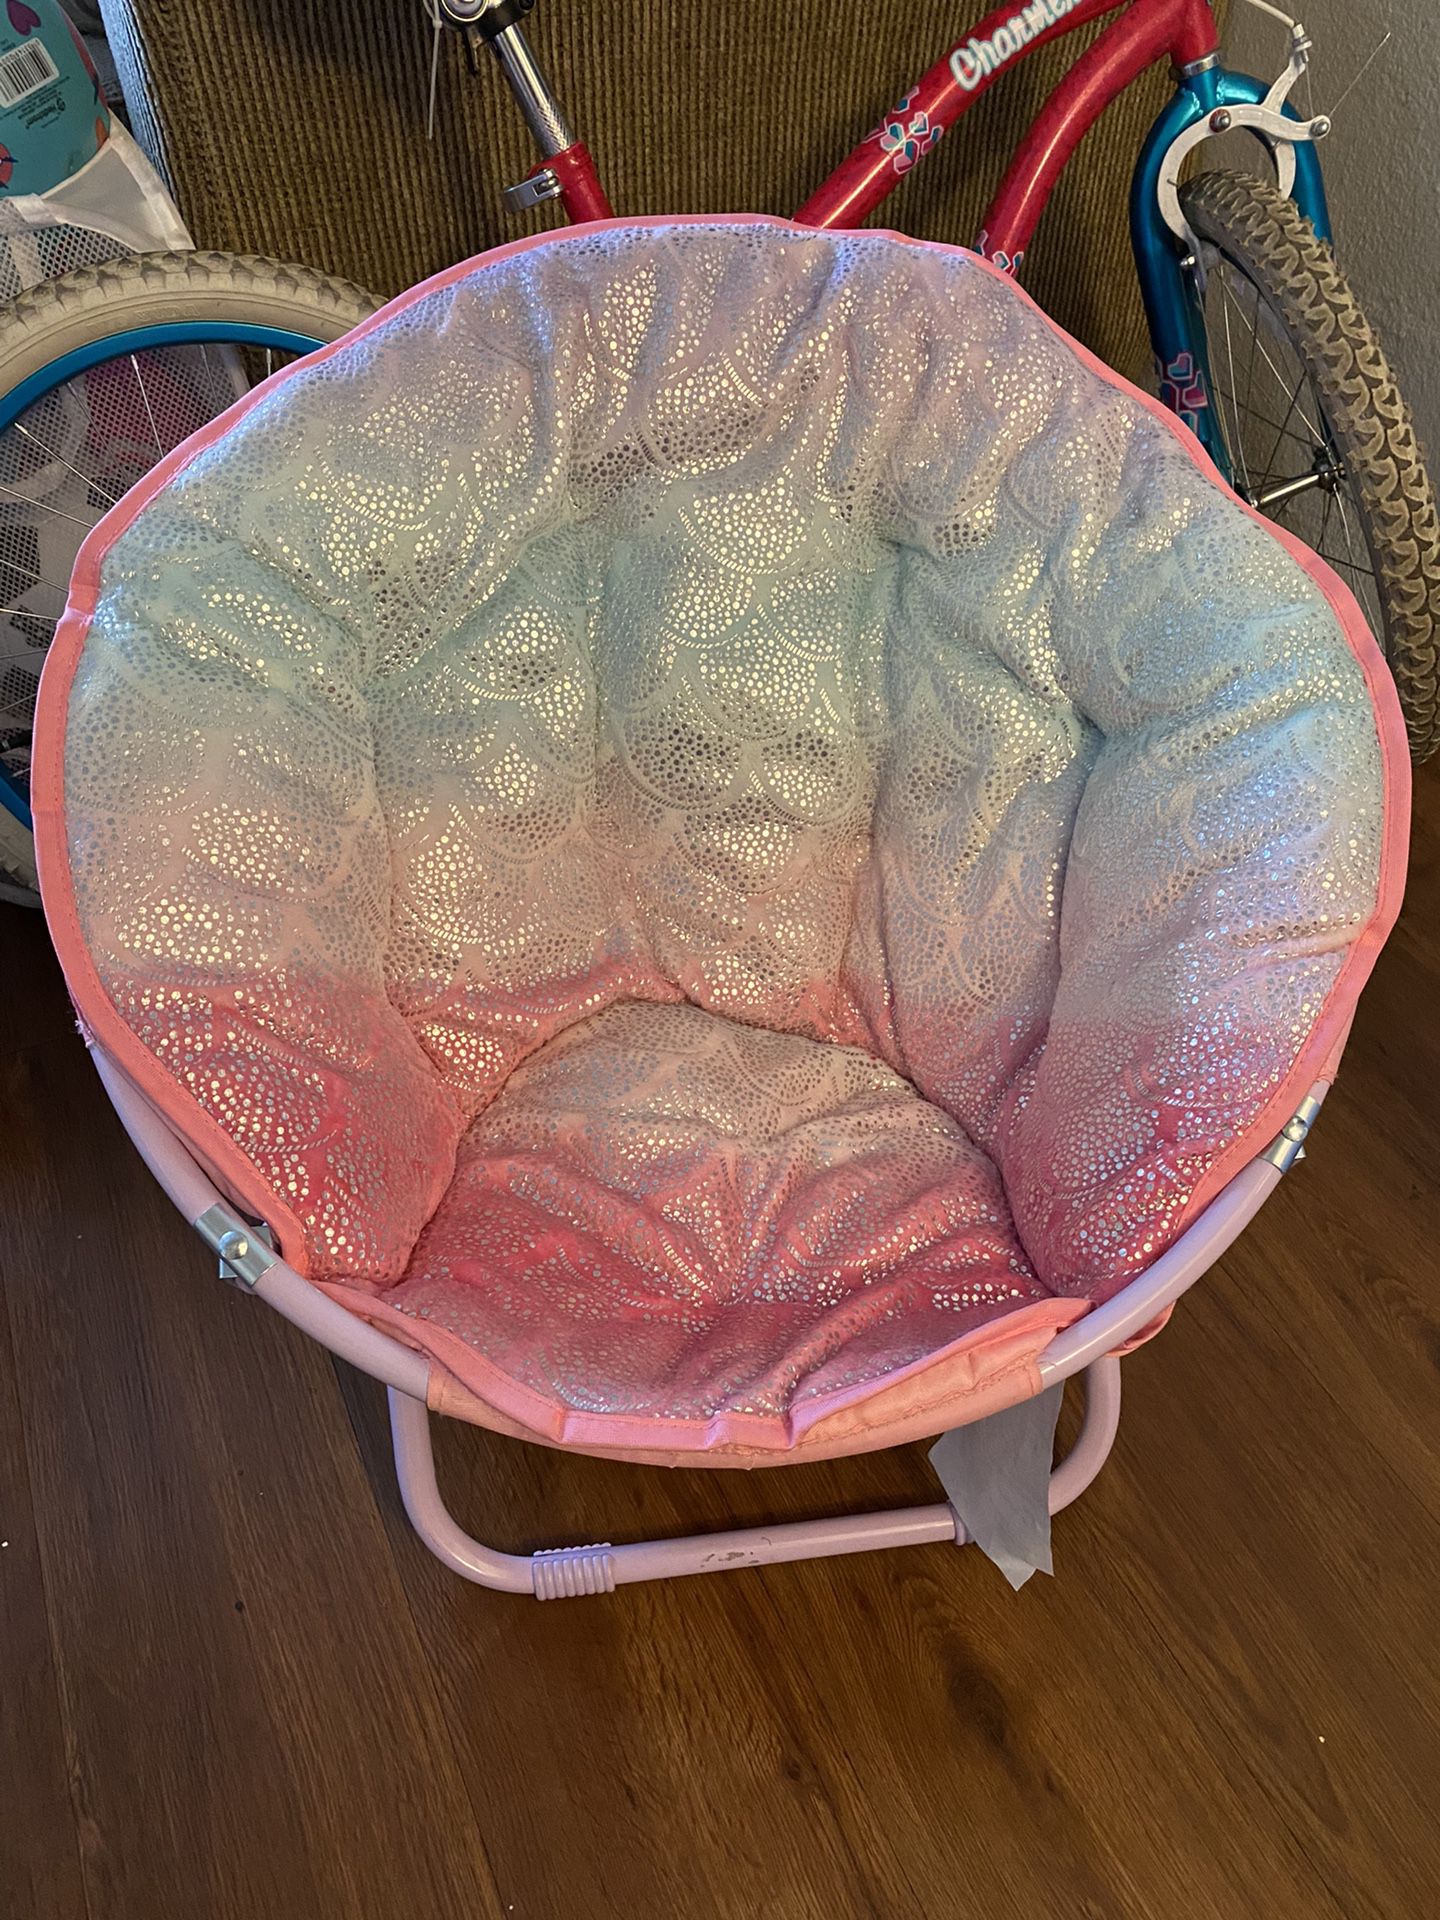 Kids Toddler Saucer Round Mermaid Teal chair